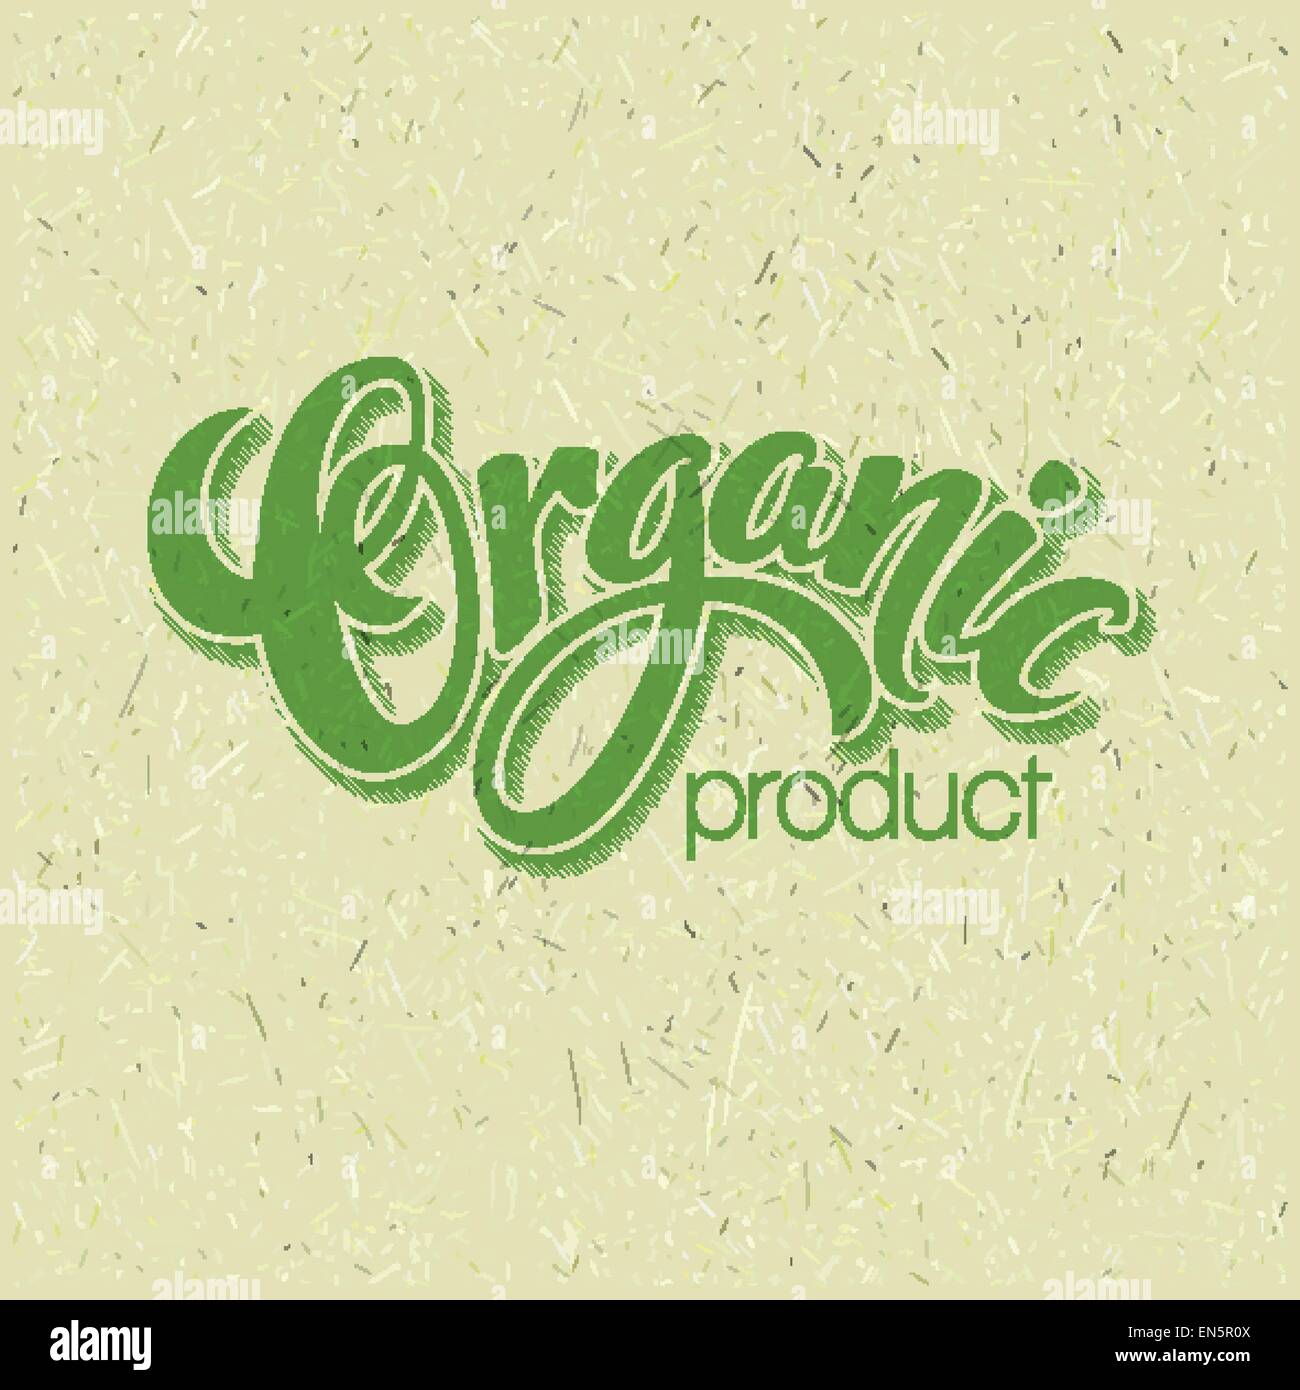 Title Organic. Vector Handmade lettering. EPS 10 Stock Vector